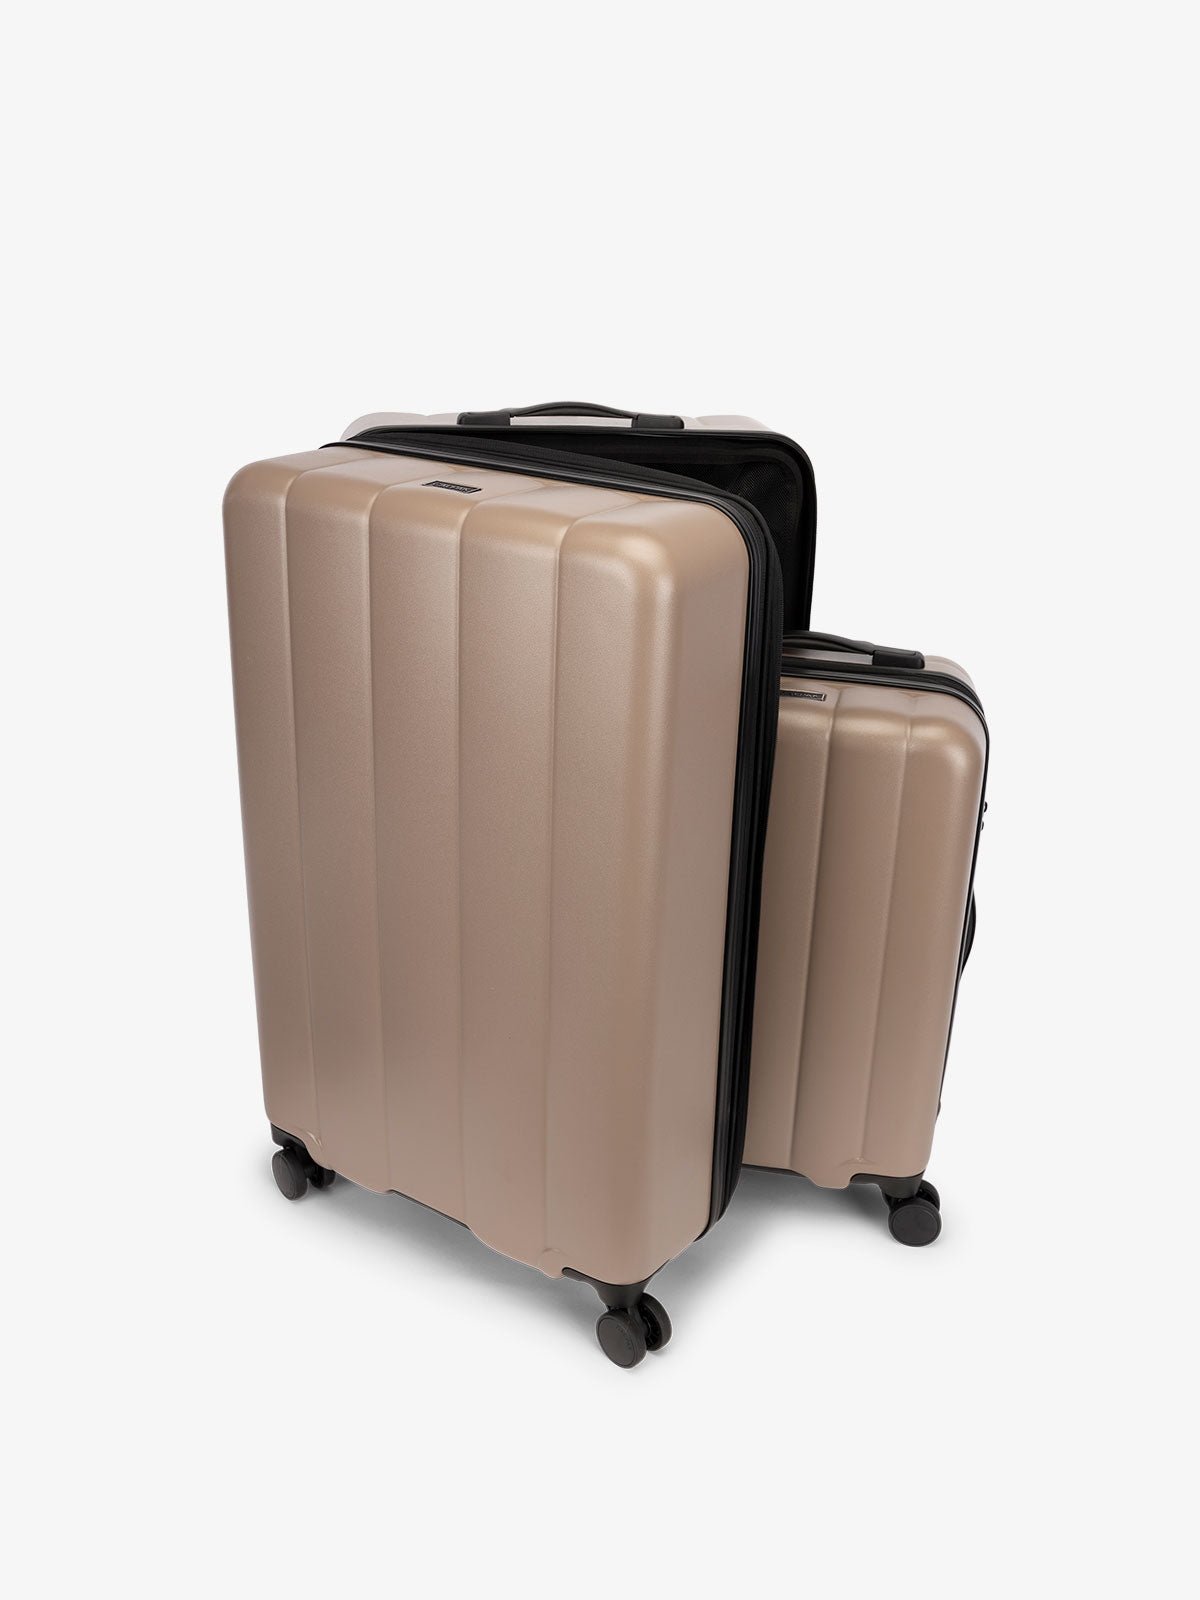 CALPAK Starter Bundle 2 piece hard side luggage set with 360 spinner wheels in chocolate